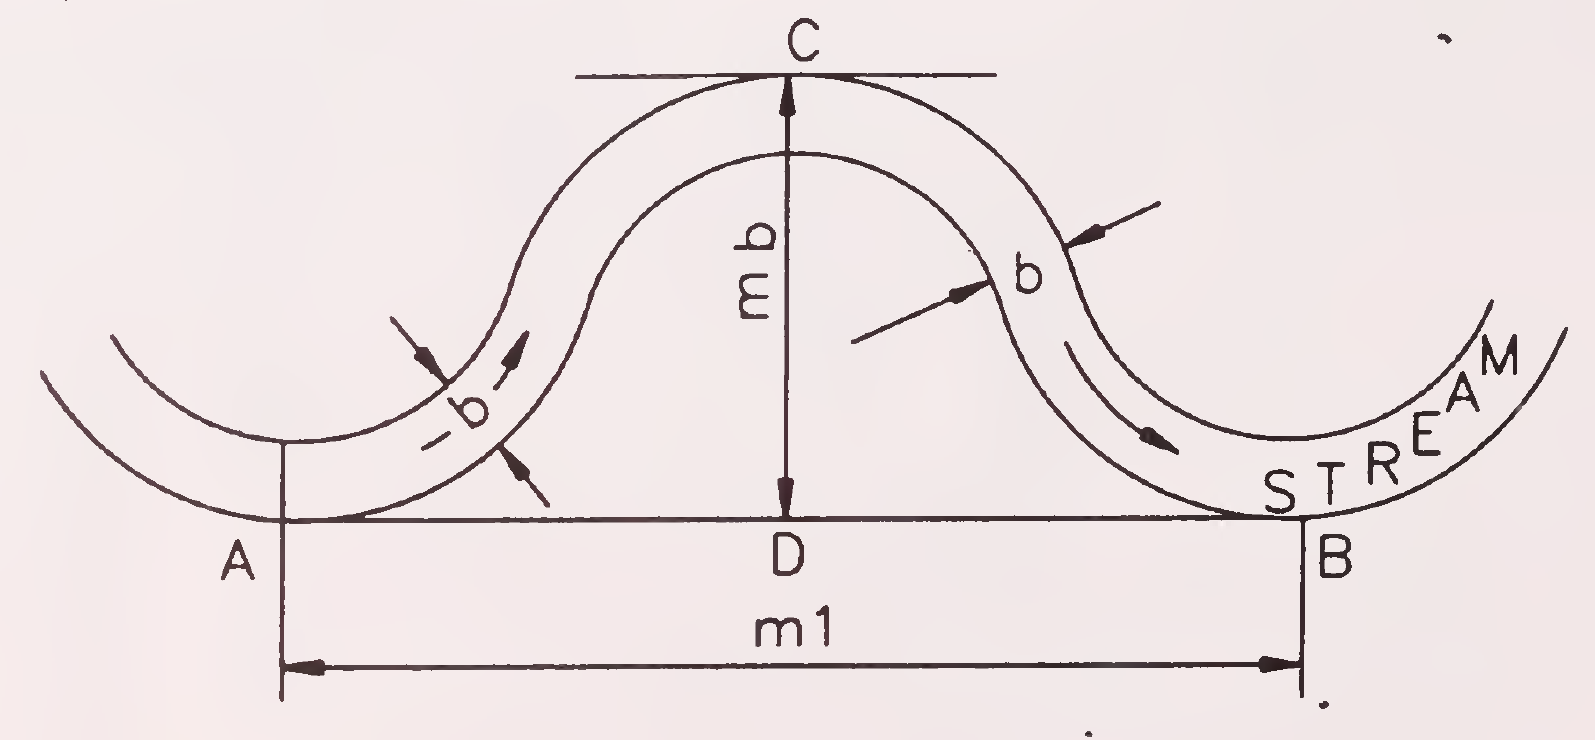 Fig. 5.5. Sketch showing a loop in a river (Para 5.2.3.2.)